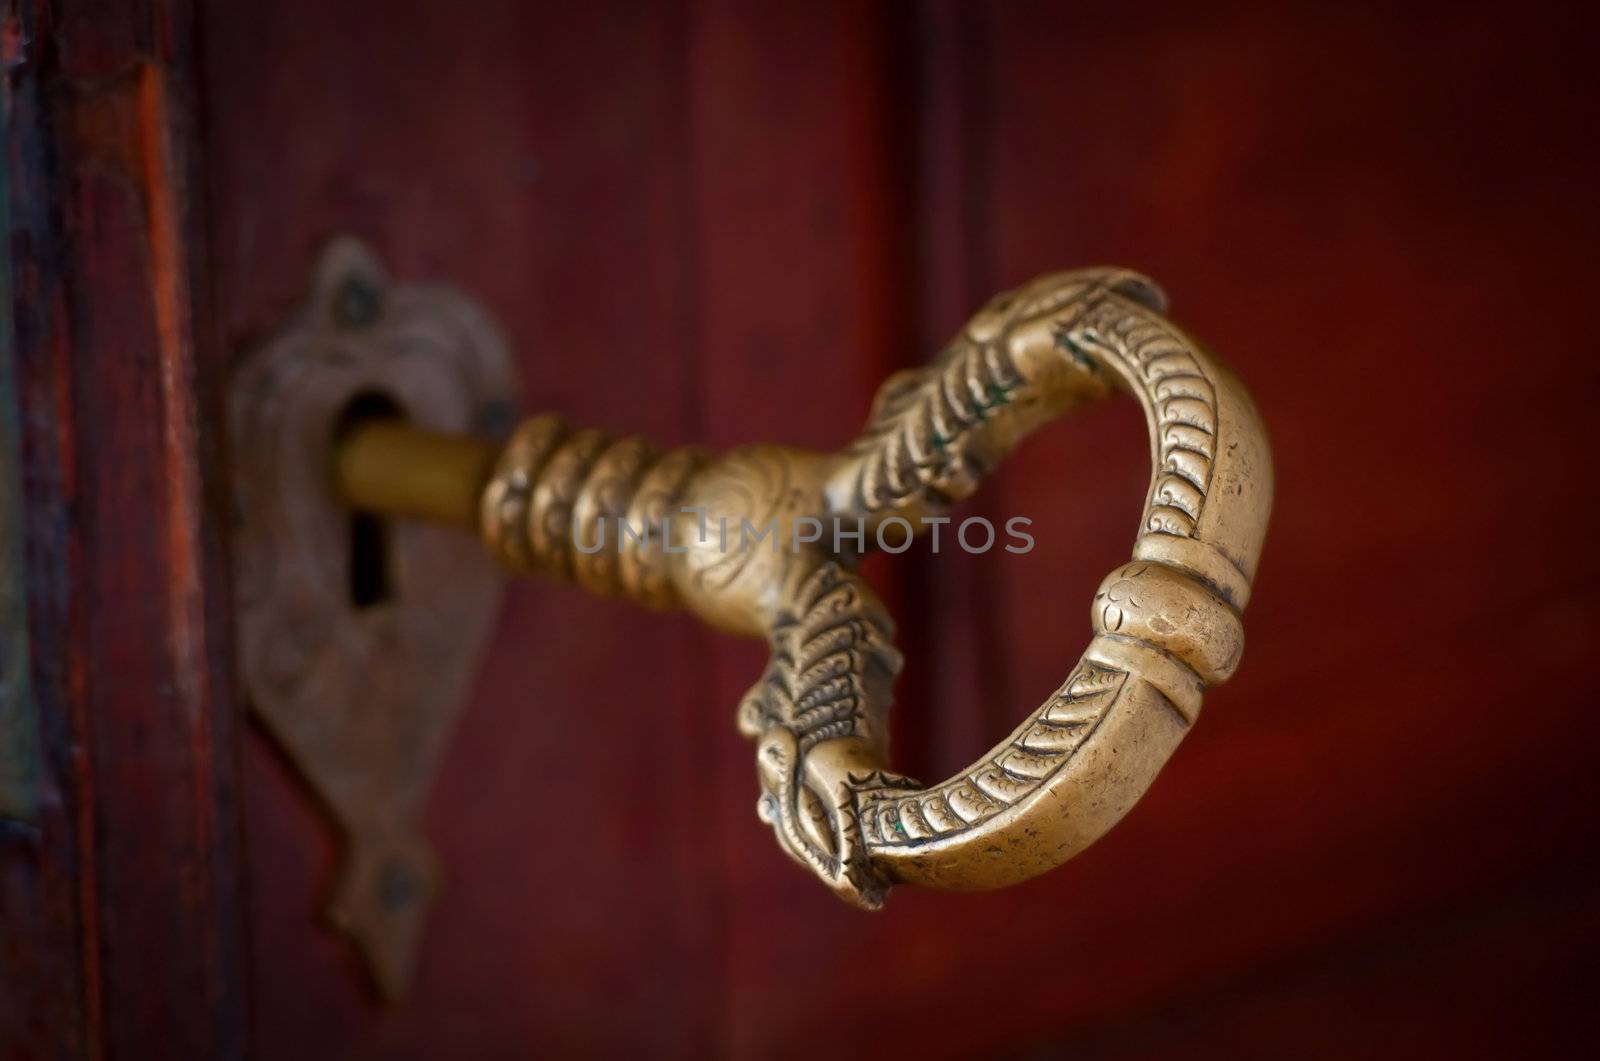 Antique beautiful bronze key in a door by iryna_rasko